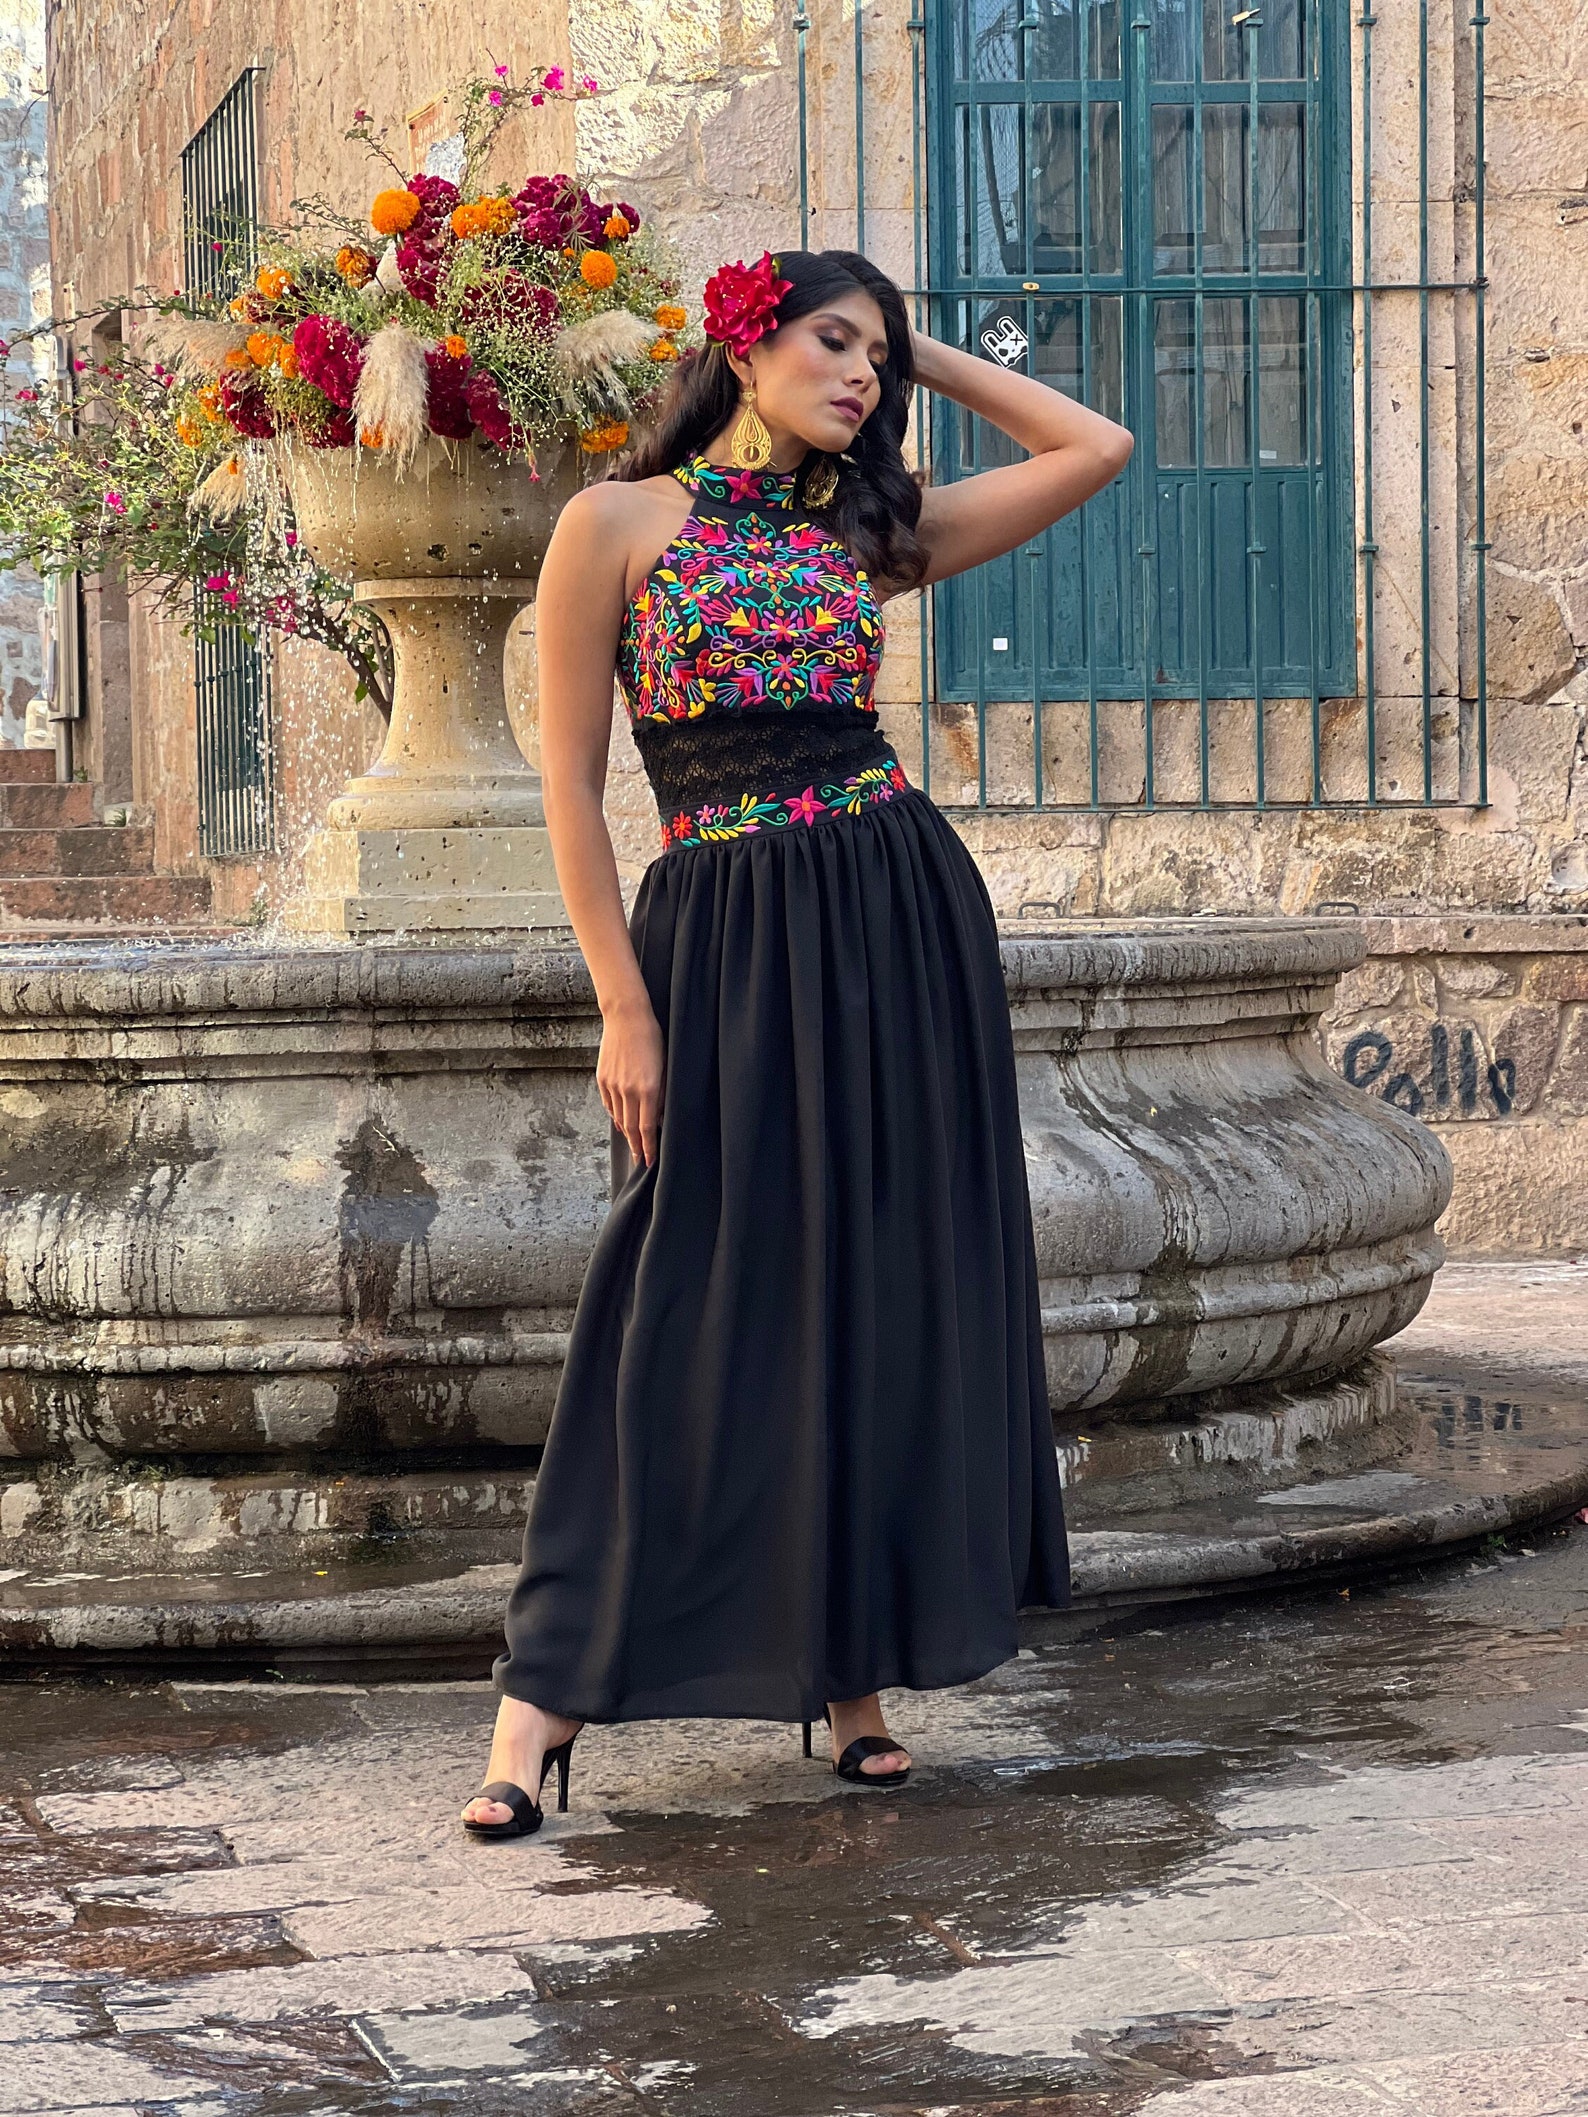 Floral Halter Dress. Floral Embroidered Dress. Latina Fashion - Etsy